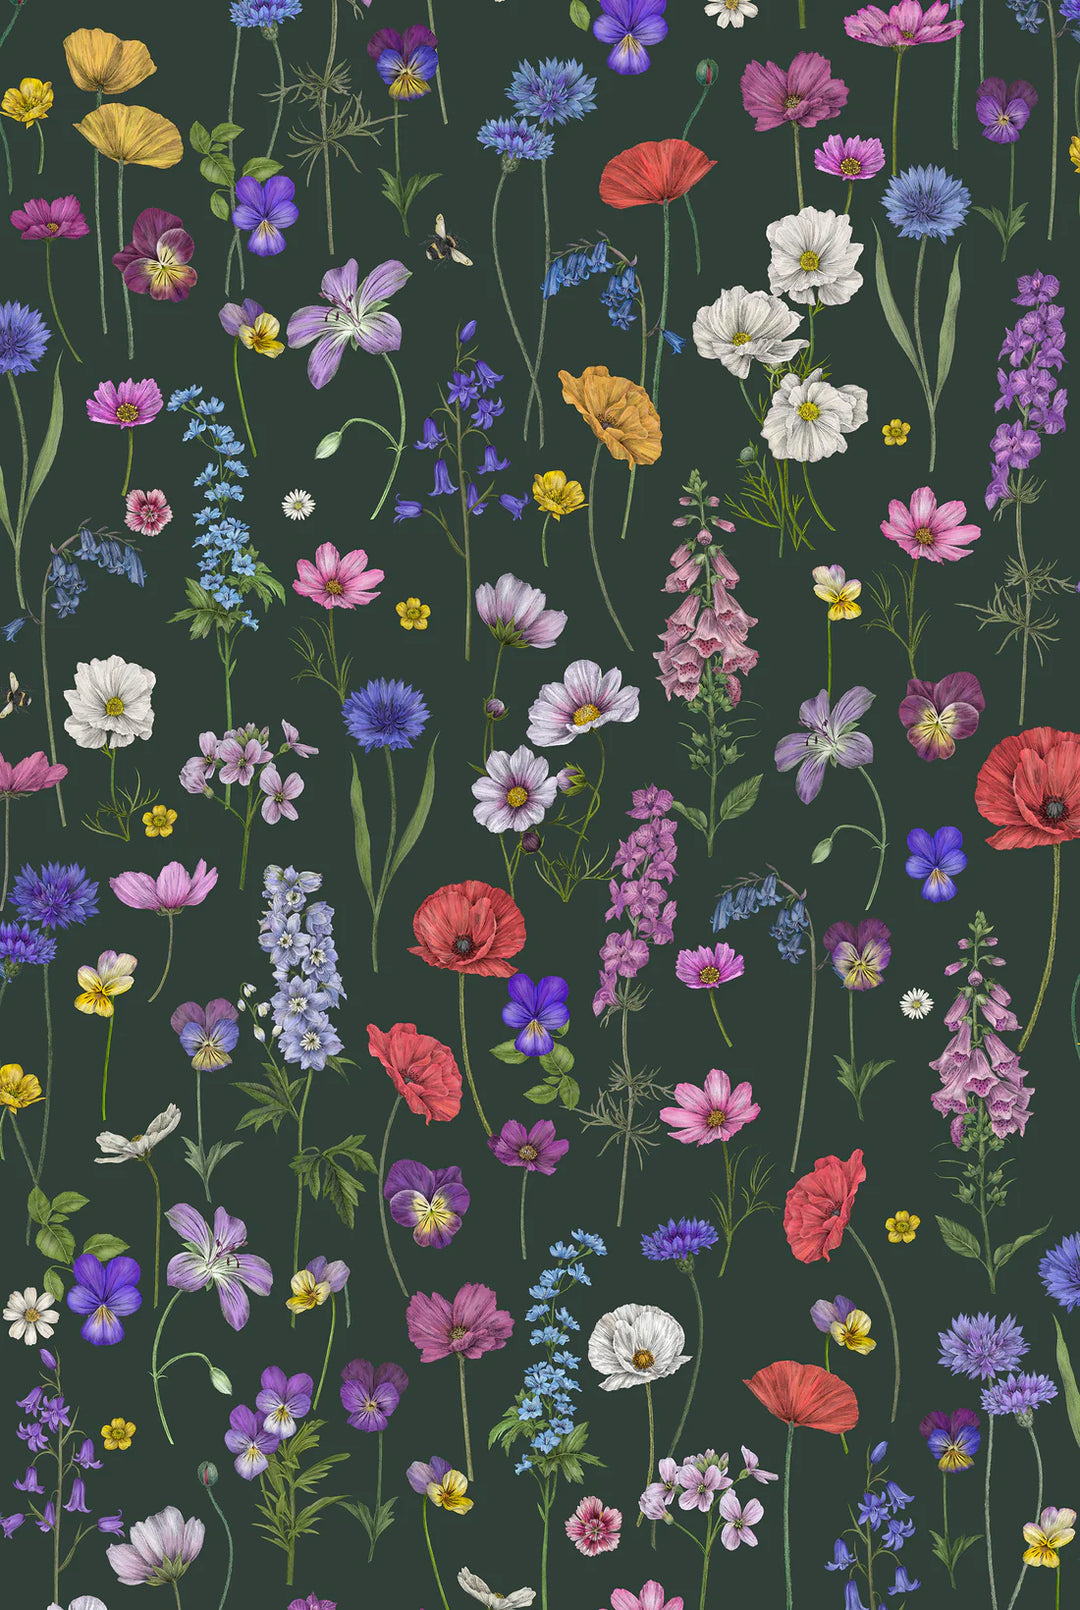 Victoria-Sanders-wallpaper-Botanica-green-background-boquett-dancing-florals-hand-drawn-flowers-delicate-spring-field-floral-print-illustrated-luxury-wallpaper